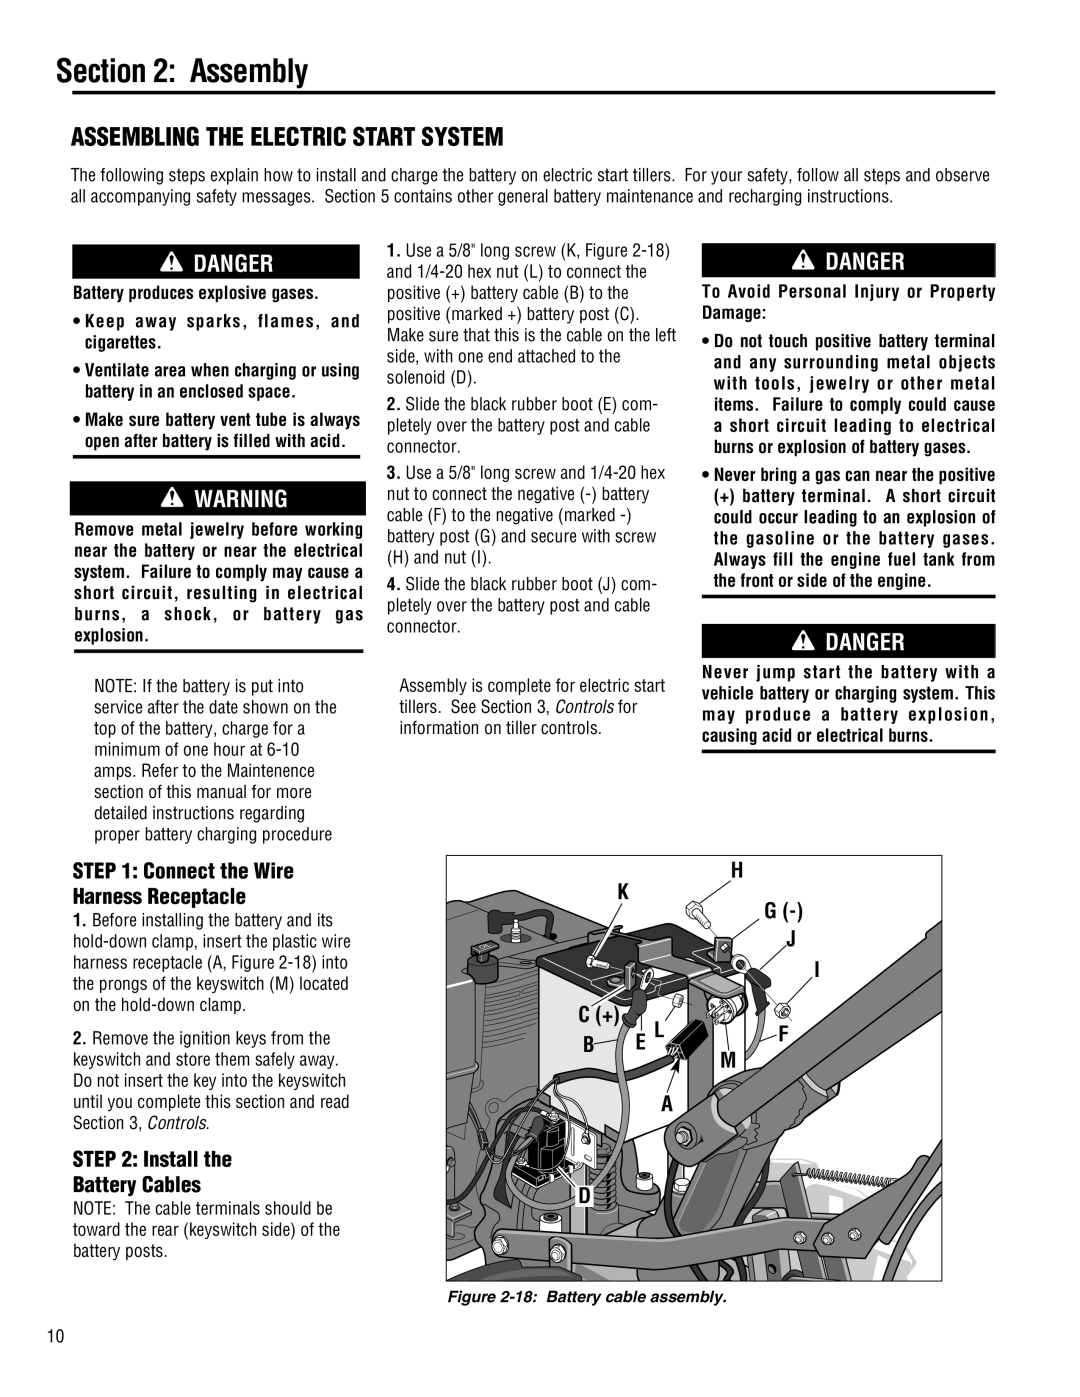 Troy-Bilt 682J-Horse Assembling The Electric Start System, Danger, Install the Battery Cables, H K G J I C + B E Lf M A D 